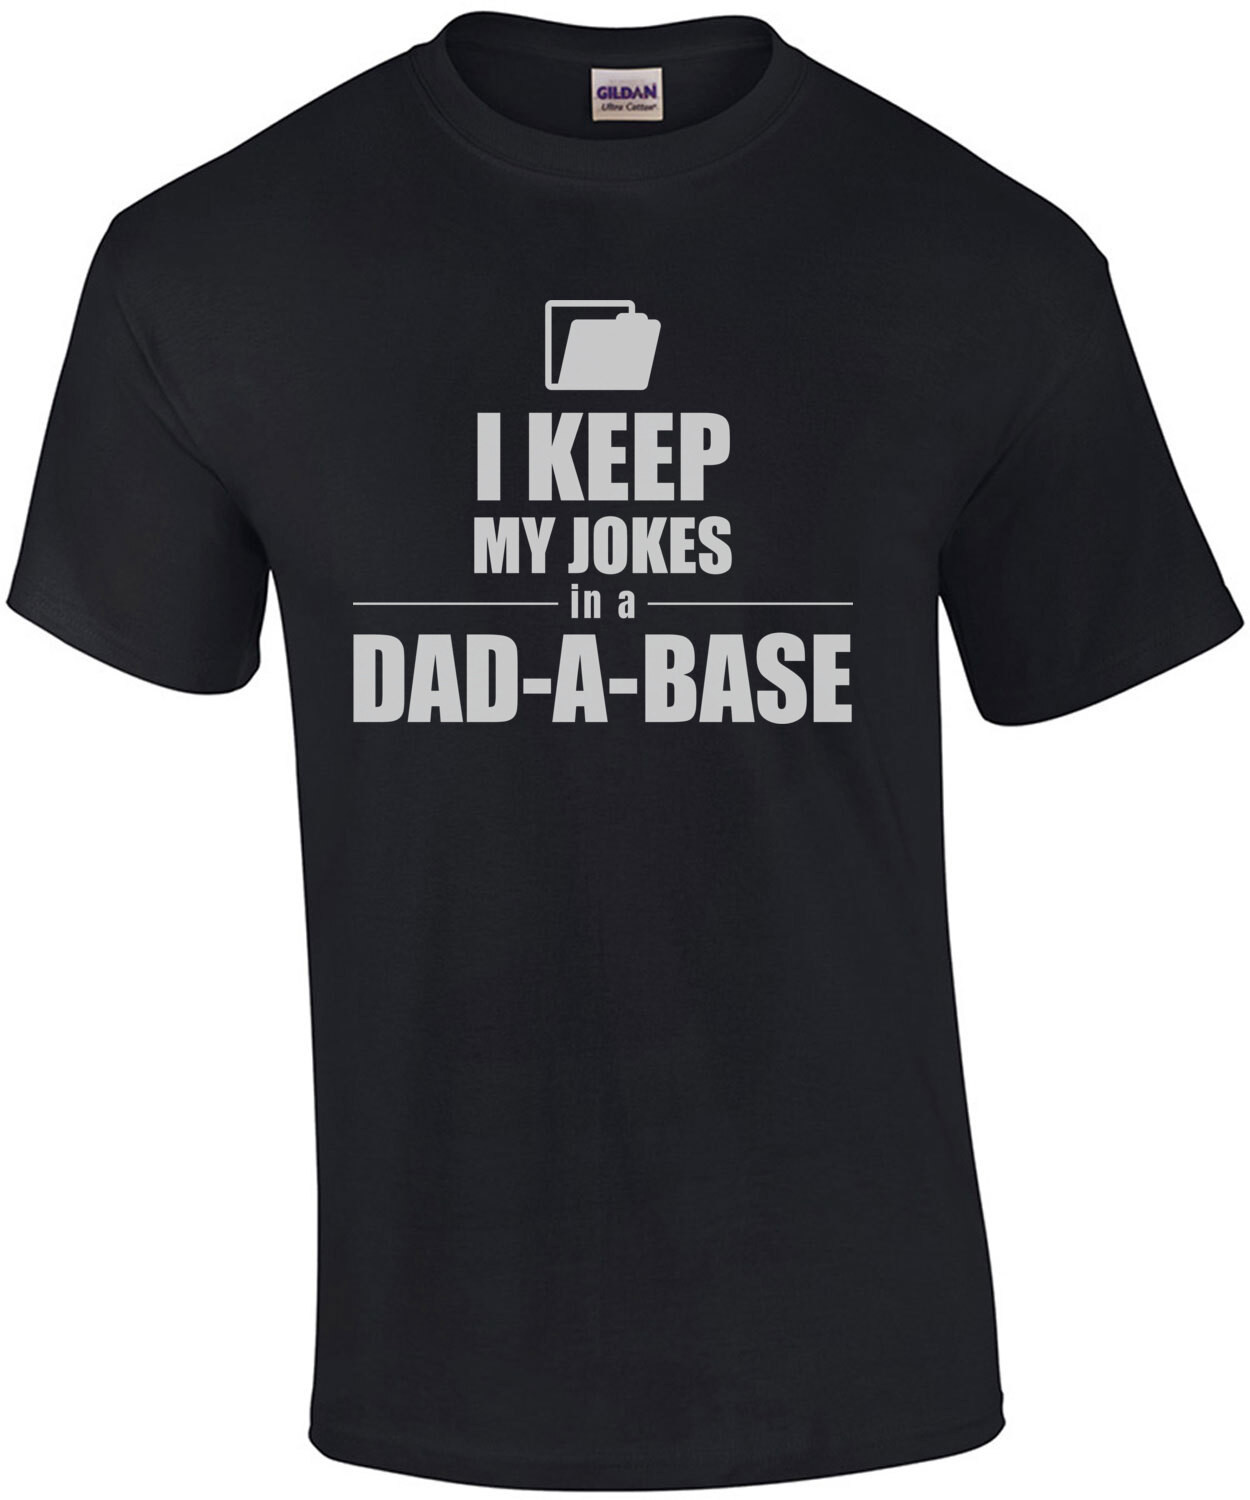 I keep my jokes in a Dad-a-Base - funny dad joke pun t-shirt